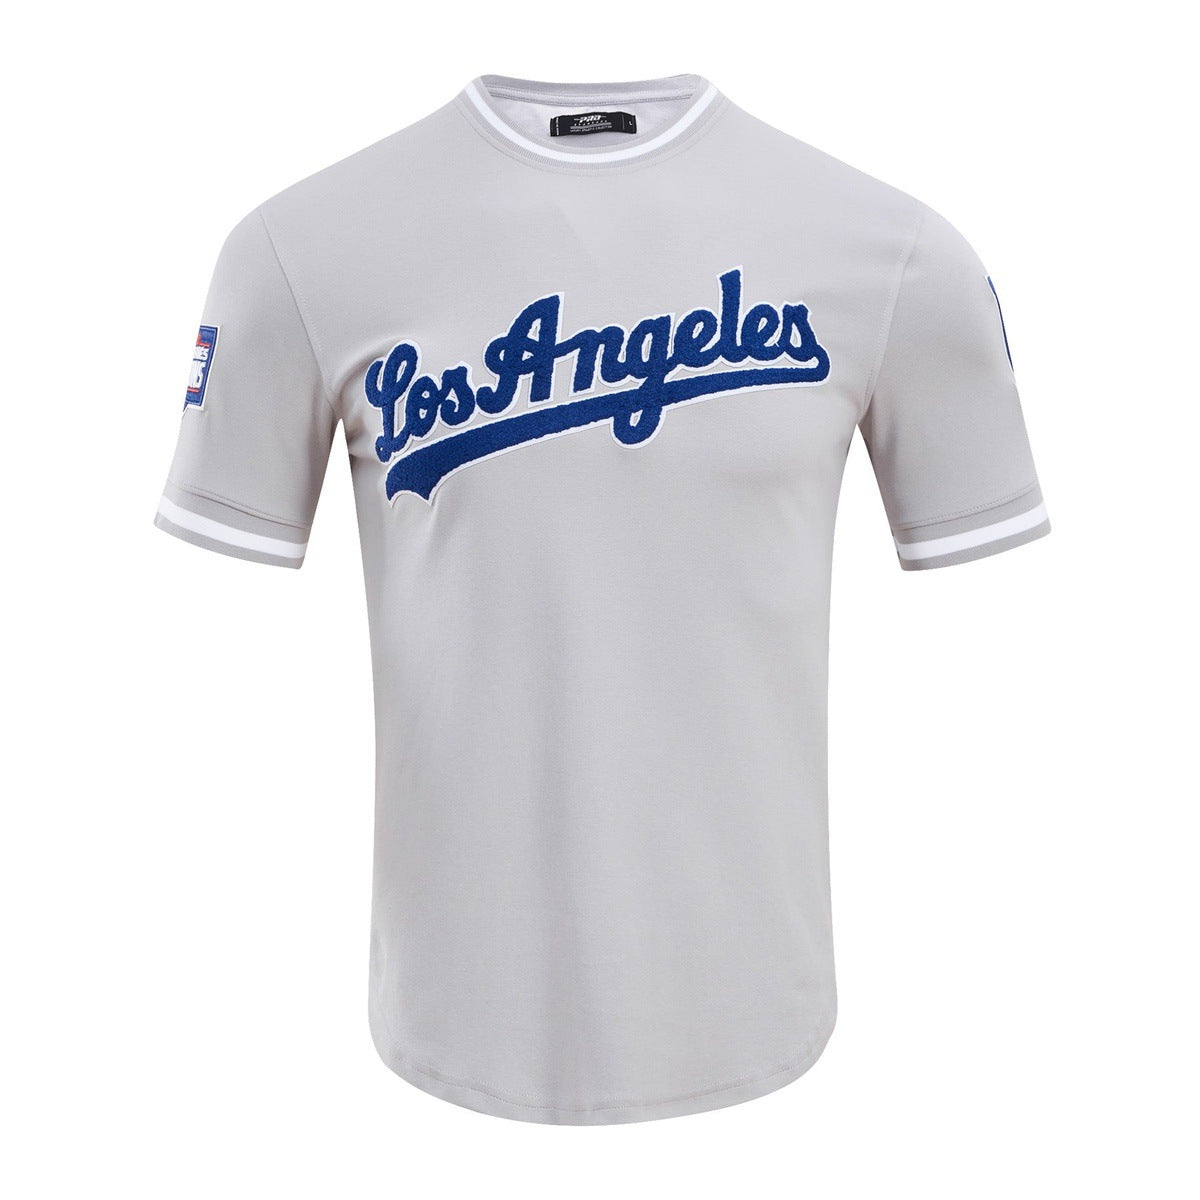 503 Sports Los Angeles White Sox T-Shirt - Baby Blue - Cotton - XXXXL (4XL) - Royal Retros